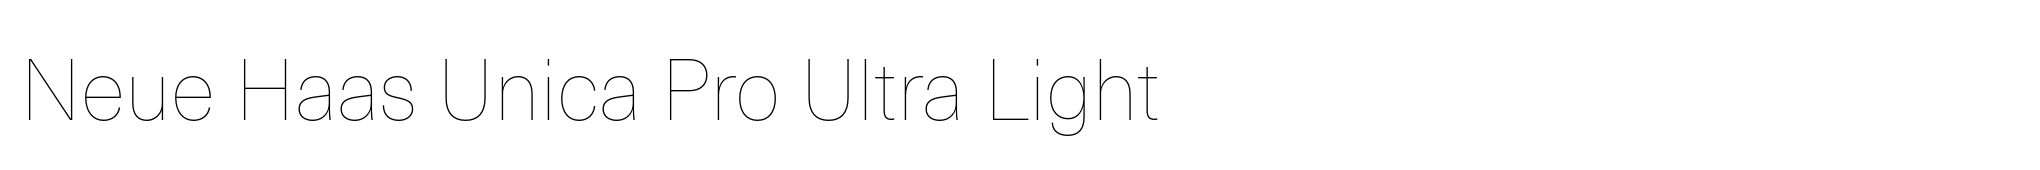 Neue Haas Unica Pro Ultra Light image